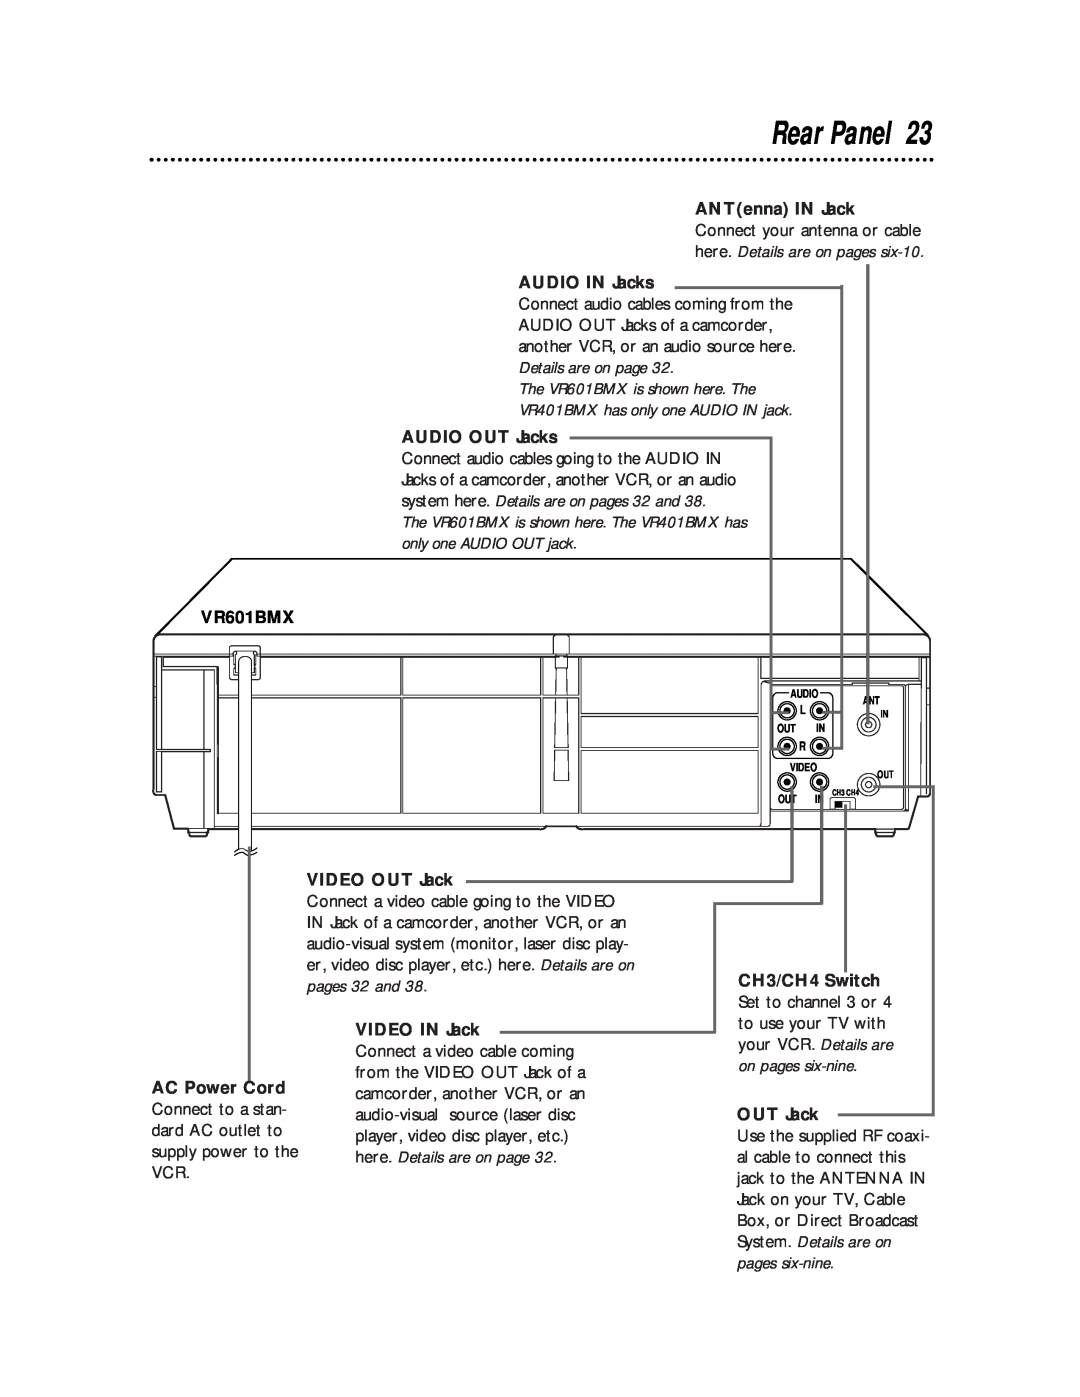 Magnavox VR401BMX, VR601BMX manual Rear Panel 